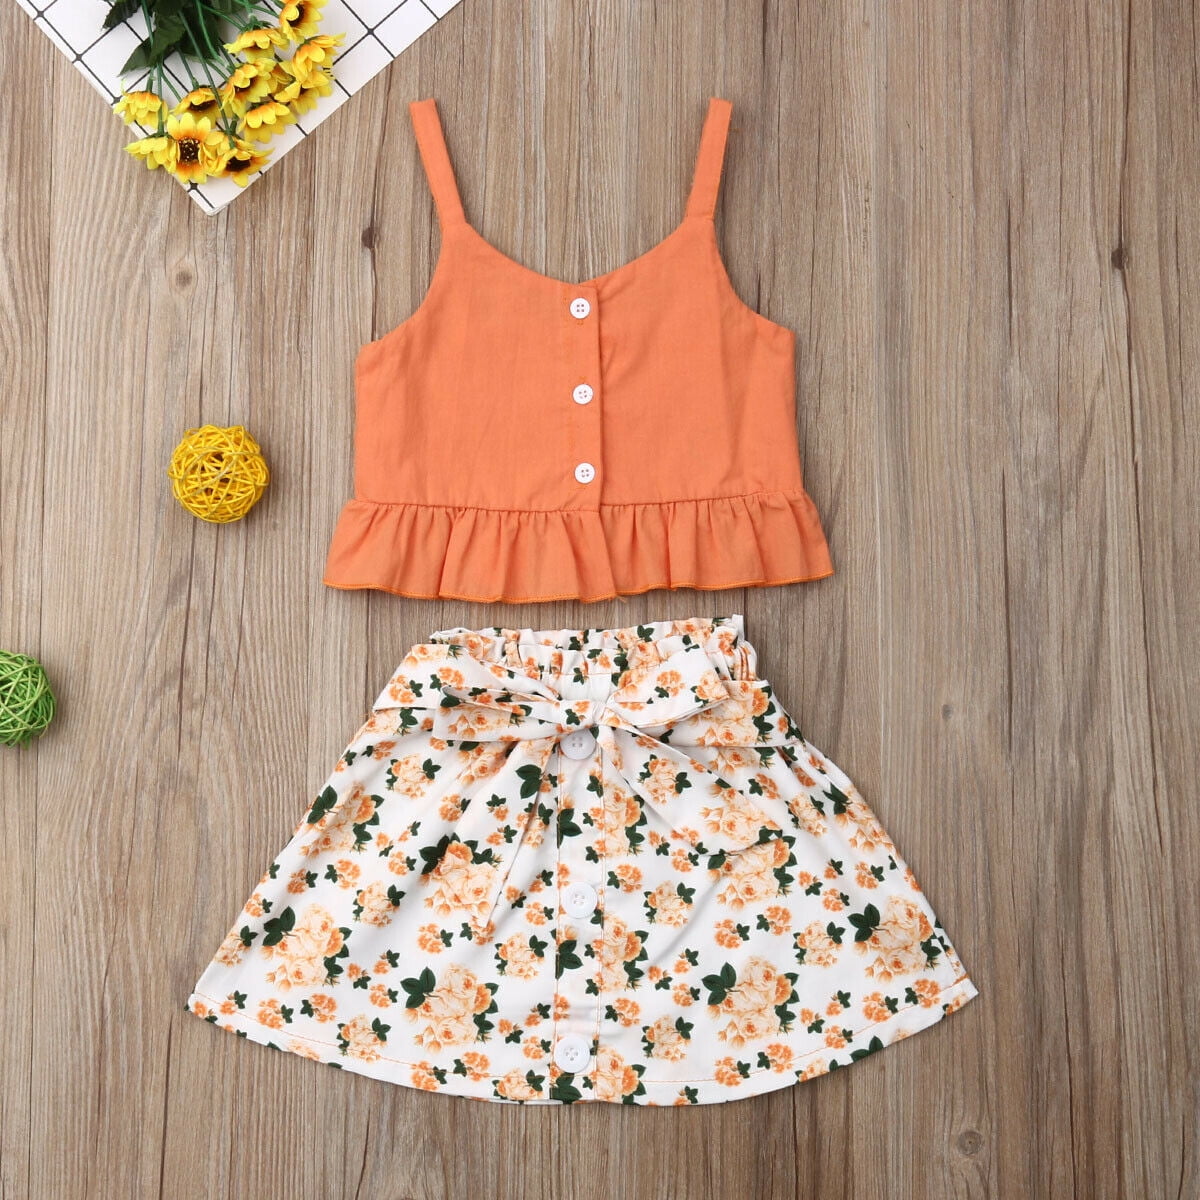 2PCS Infant Kids Baby Girls Dot Sleeveless Shirt Floral Skirt Outfit Set Clothes 